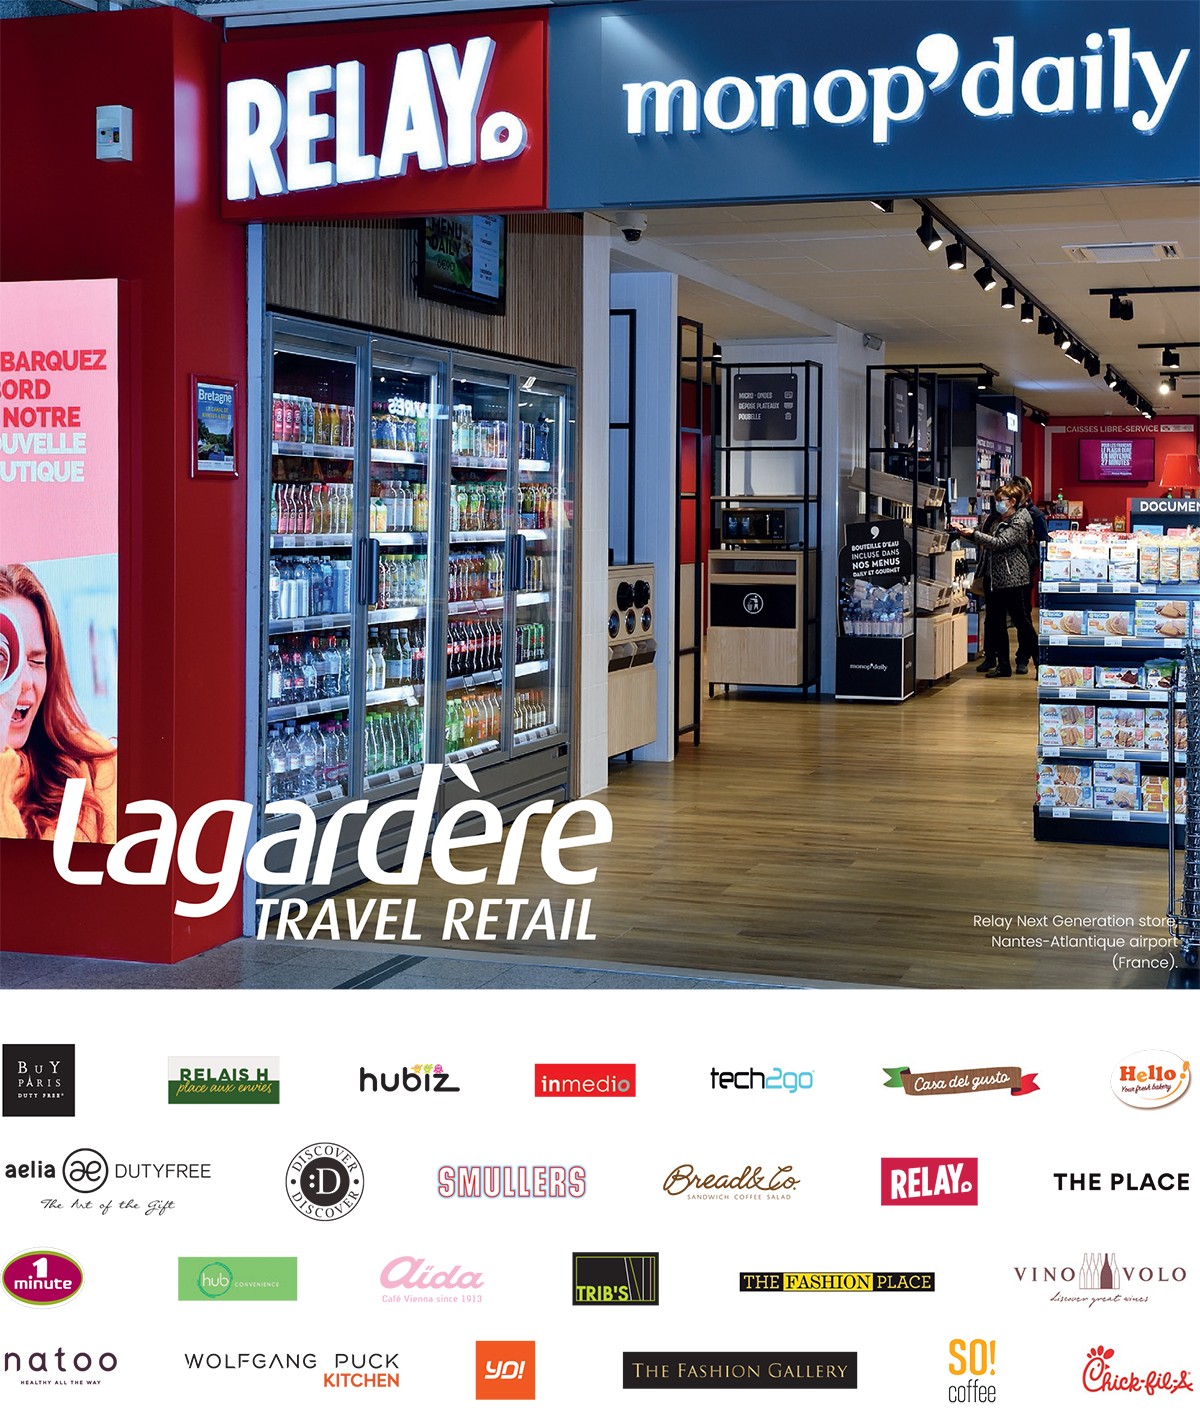 Relay Next Generation store, Nantes-Atlantique airport